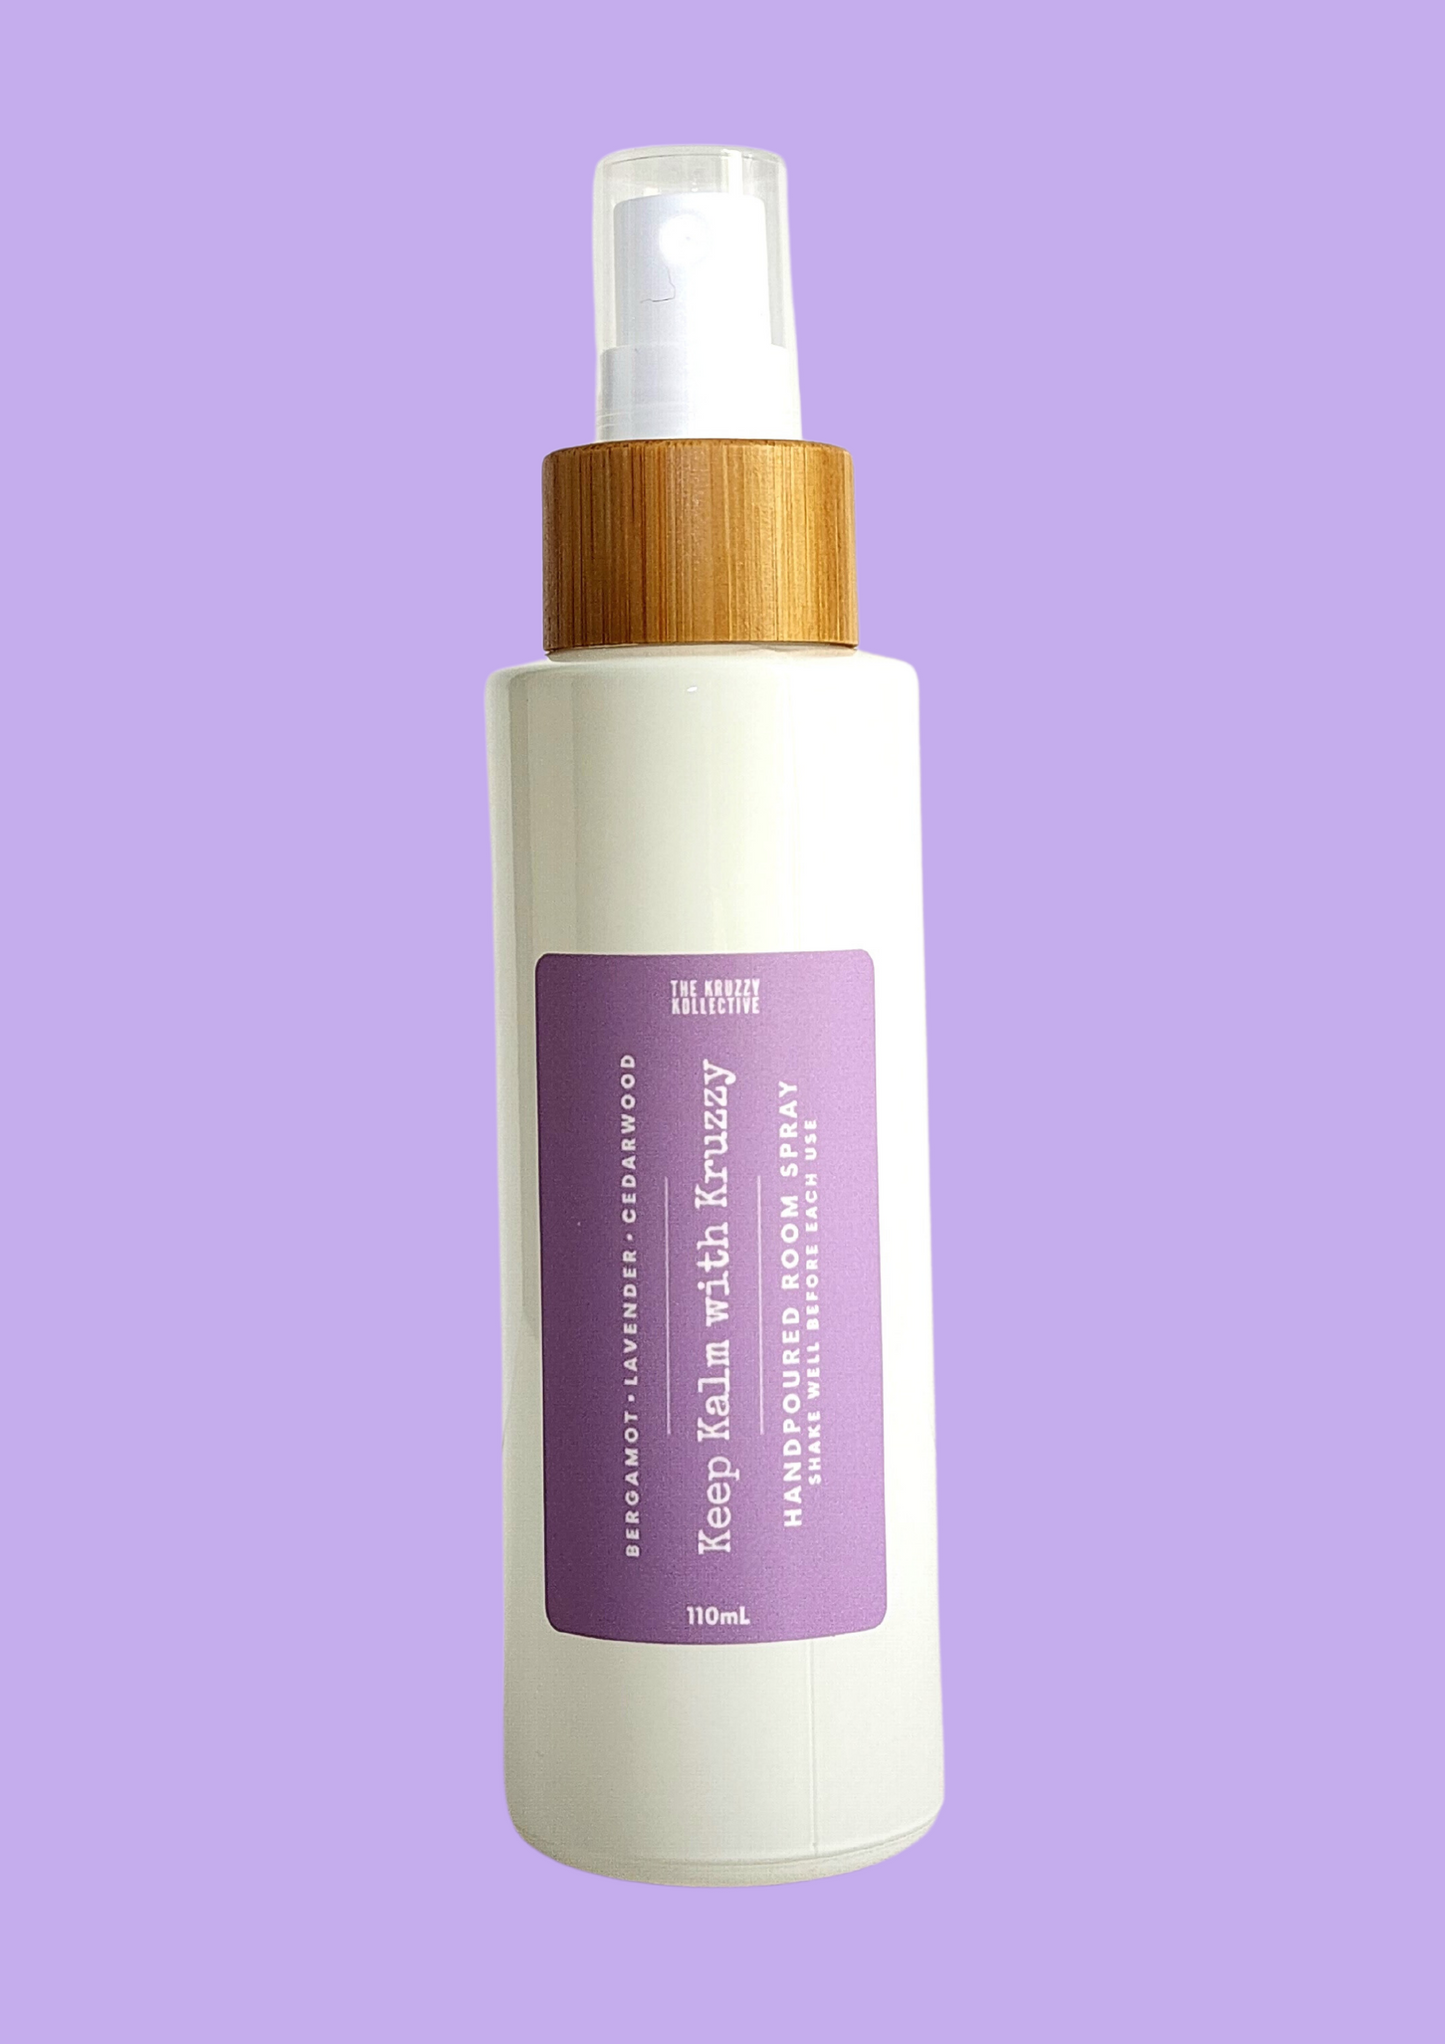 home fragrance spray odor eliminators eco friendly room fresheners air freshener lavender relaxation